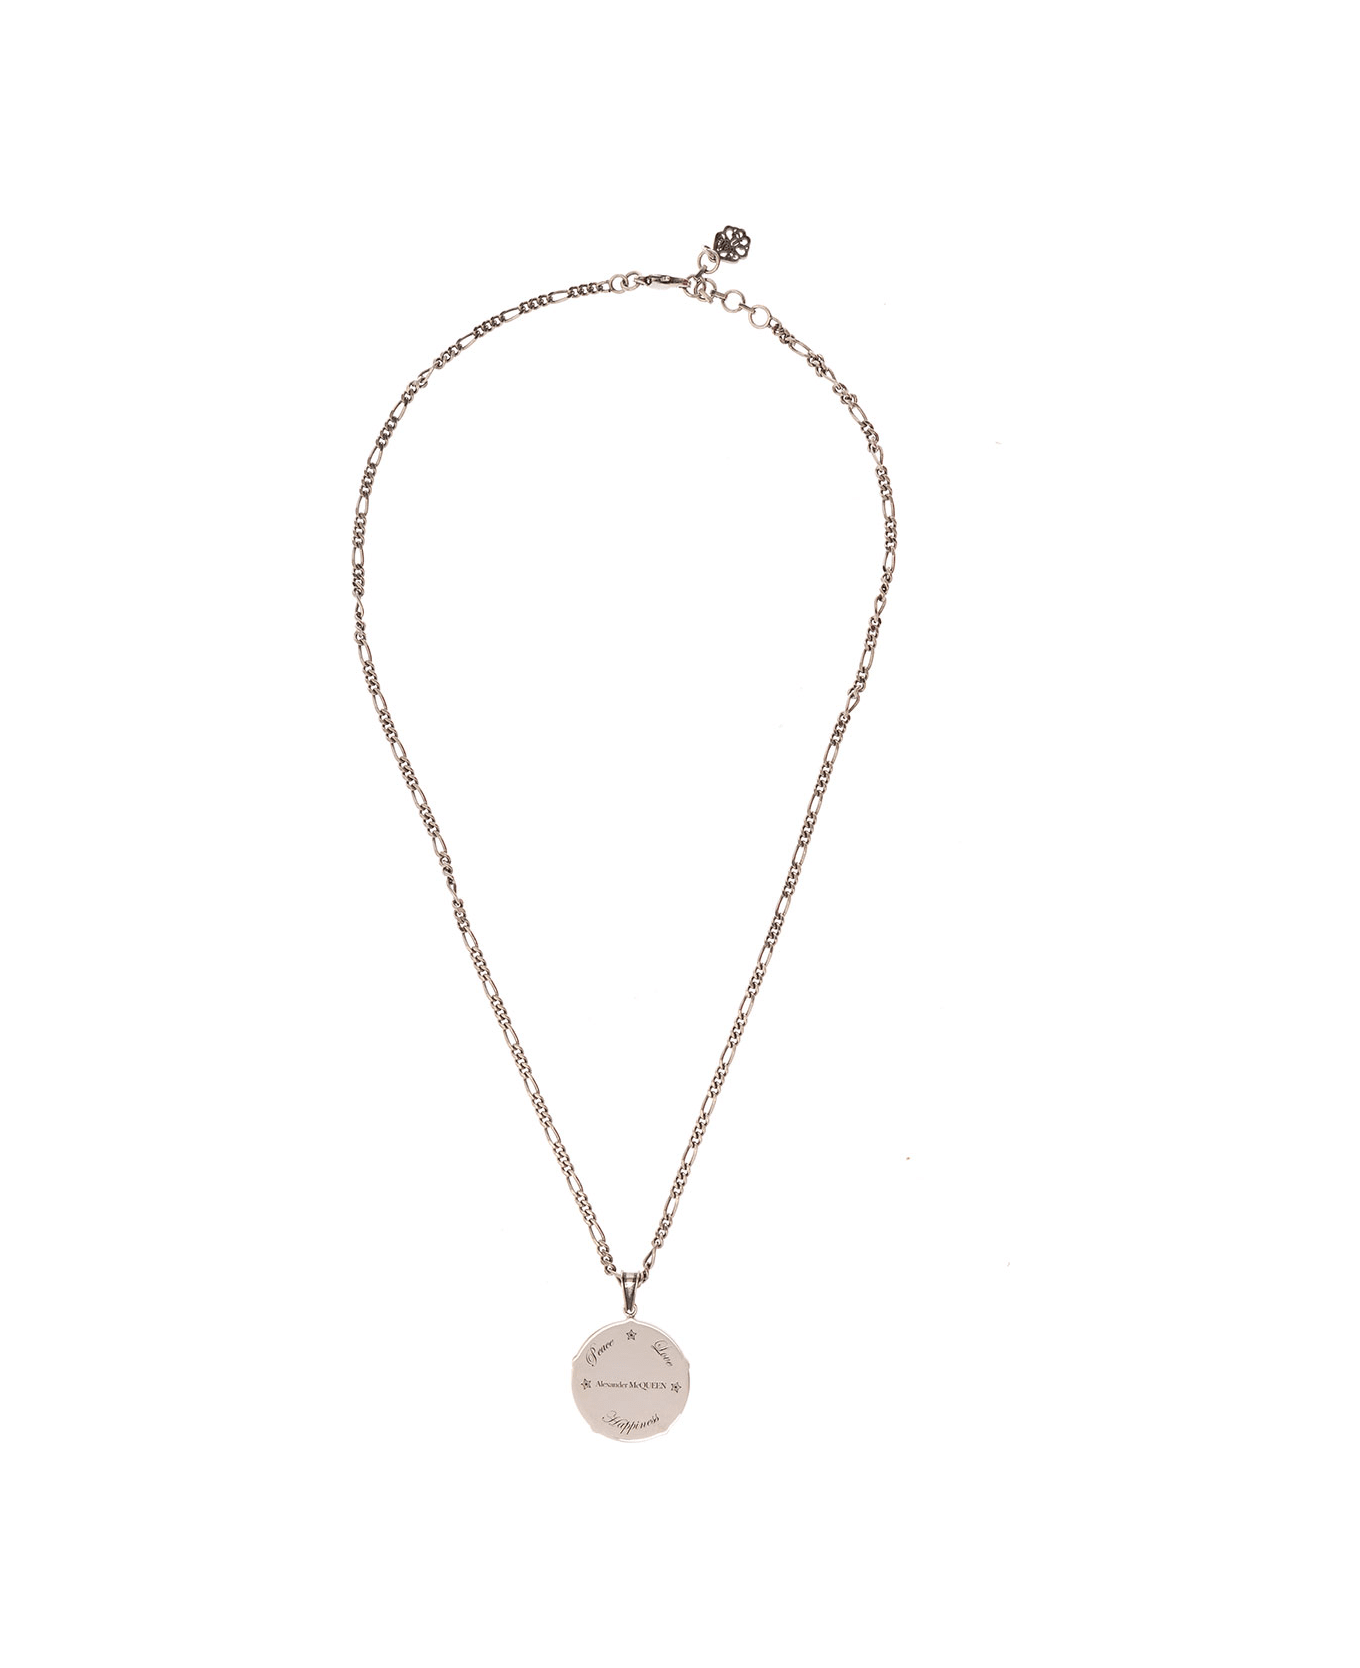 Alexander McQueen Man's Silver Metal Necklace With Logo Pendant - Metallic